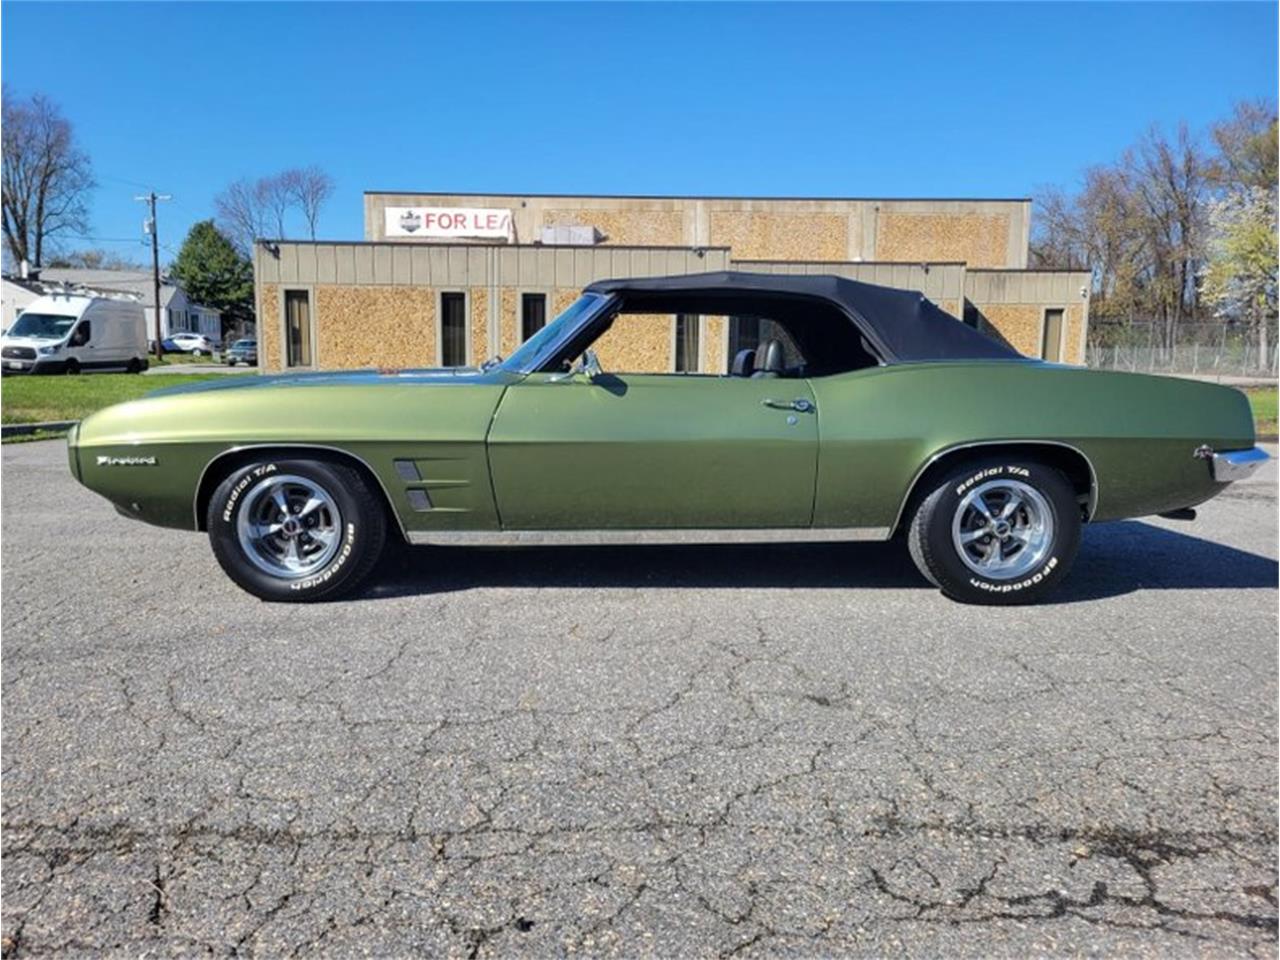 For Sale at Auction: 1969 Pontiac Firebird in Carlisle, Pennsylvania